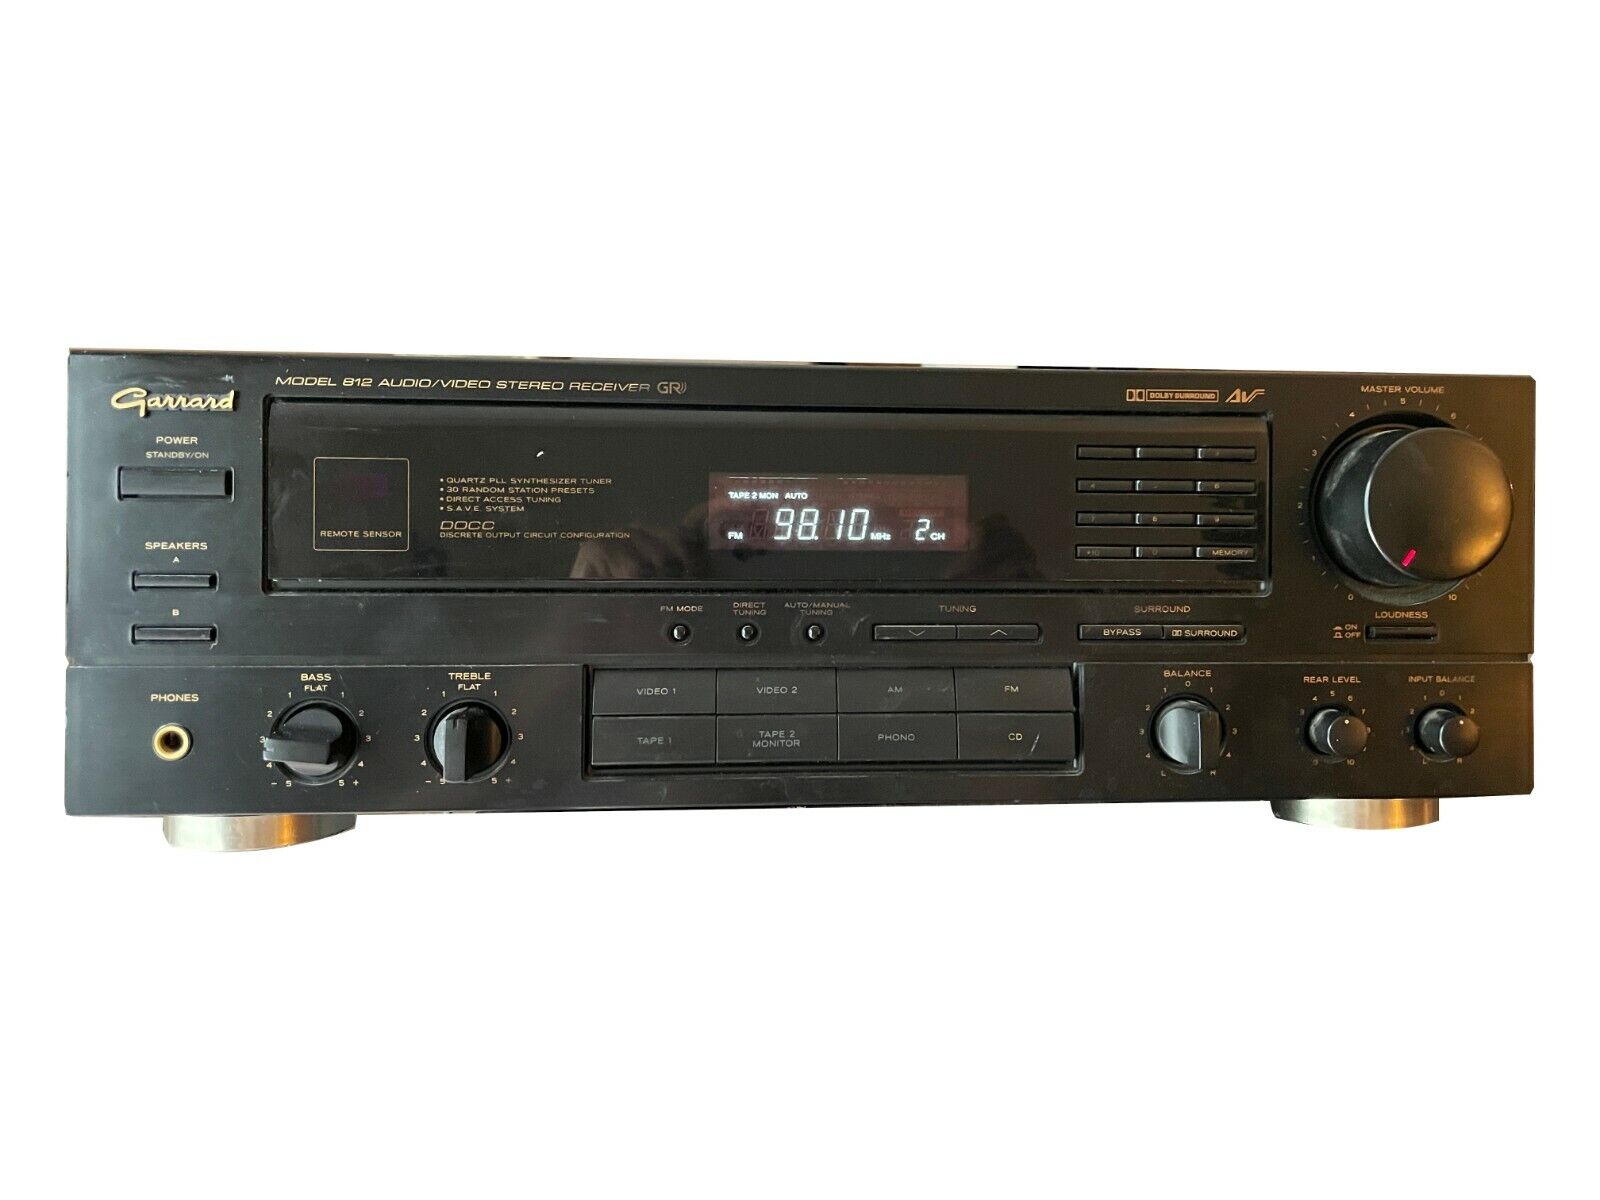 Garrard Model safety 812 Stereo Receiver FM Max 48% OFF AM